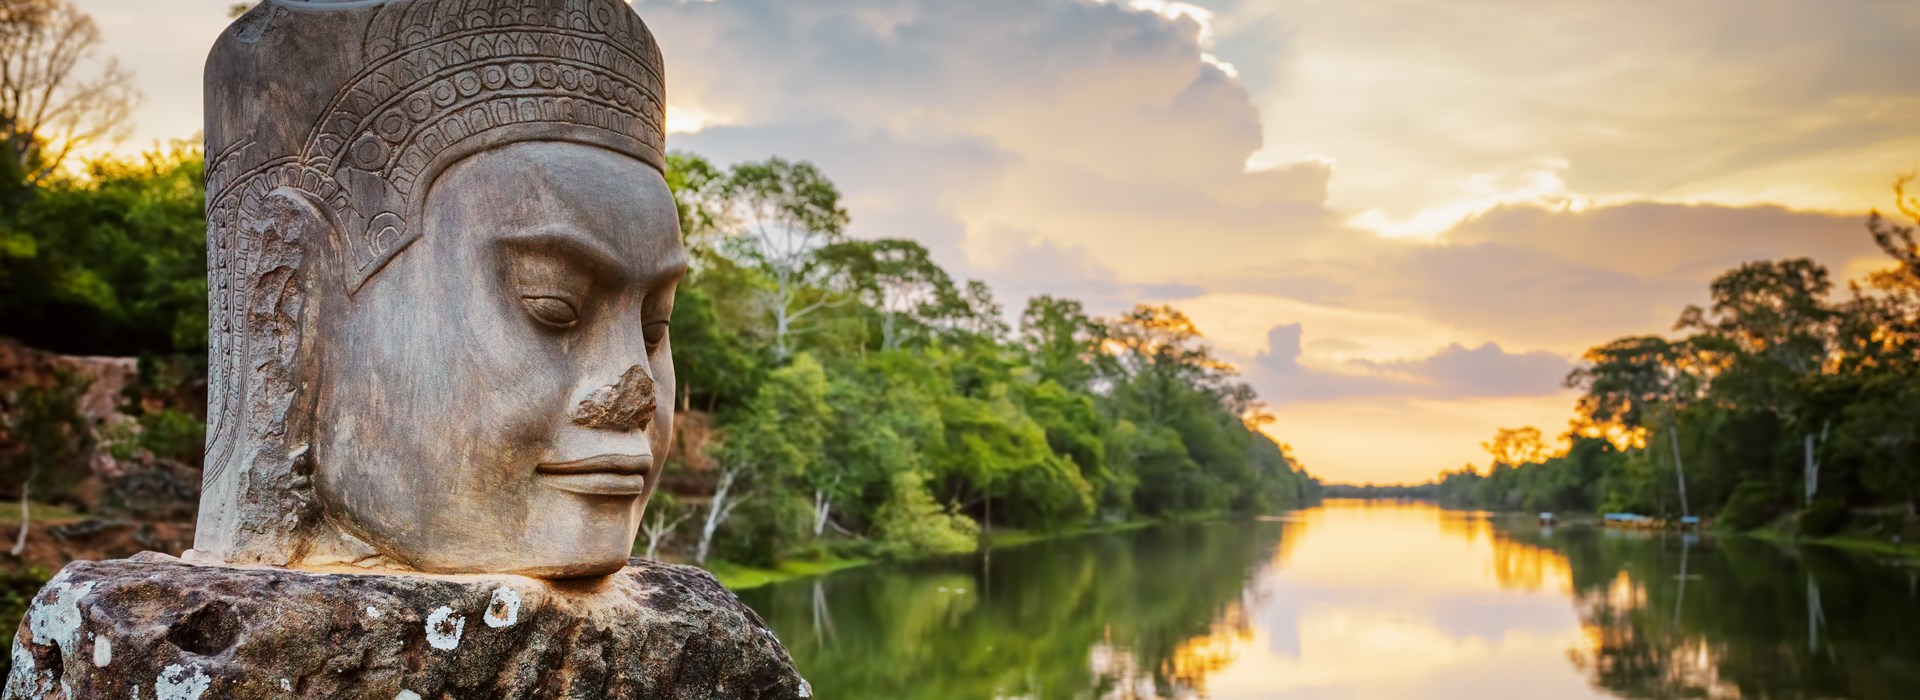 Visiter Angkor Thom - Cambodge